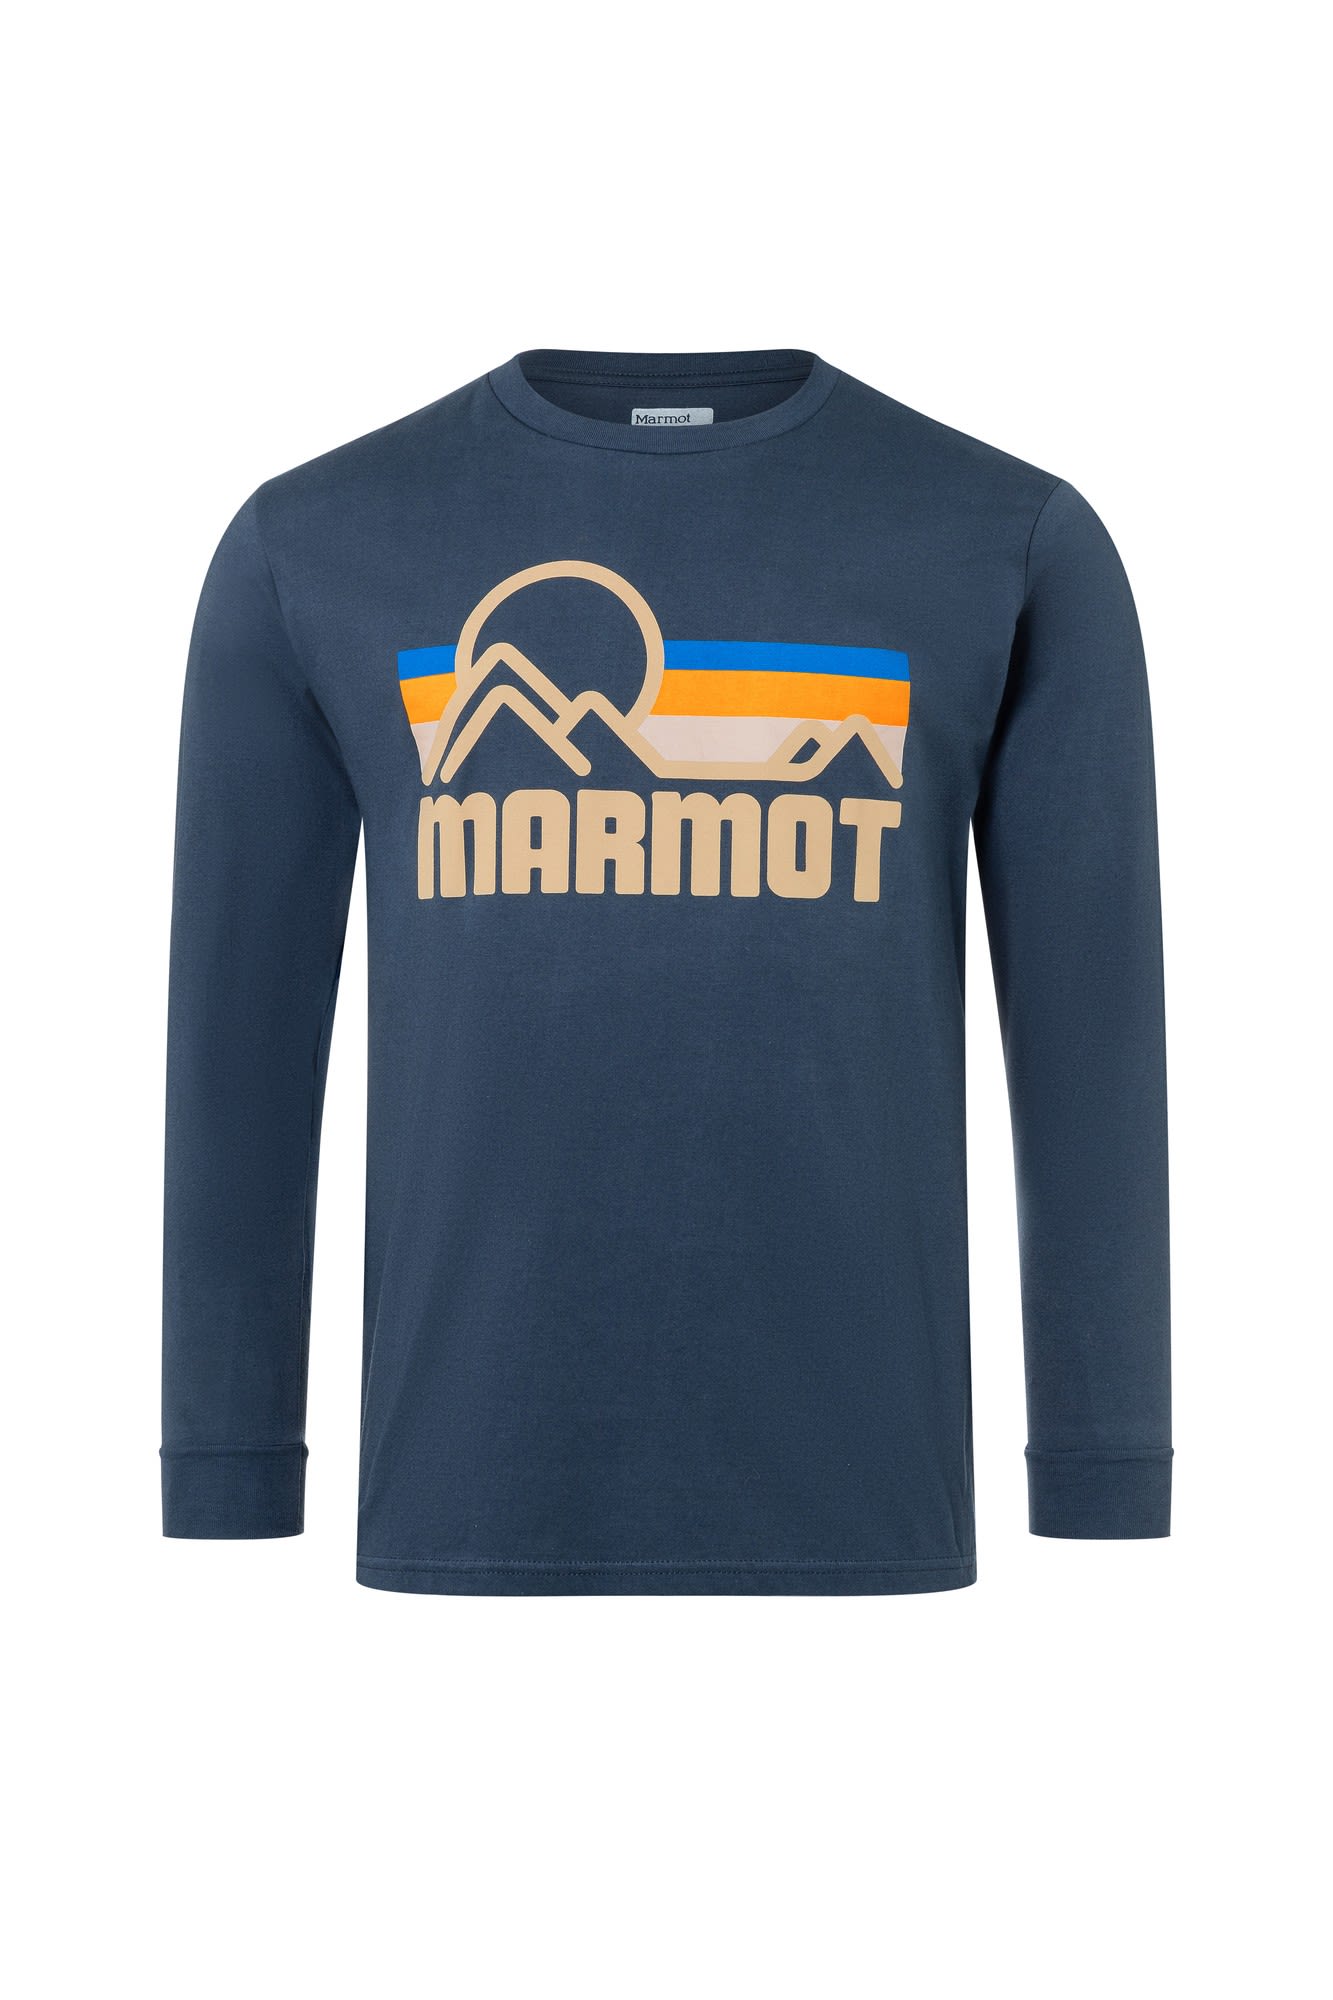 Marmot Coastal Tee Long-Sleeve Blau- Male Langarm-Shirts- Grsse S - Farbe Arctic Navy